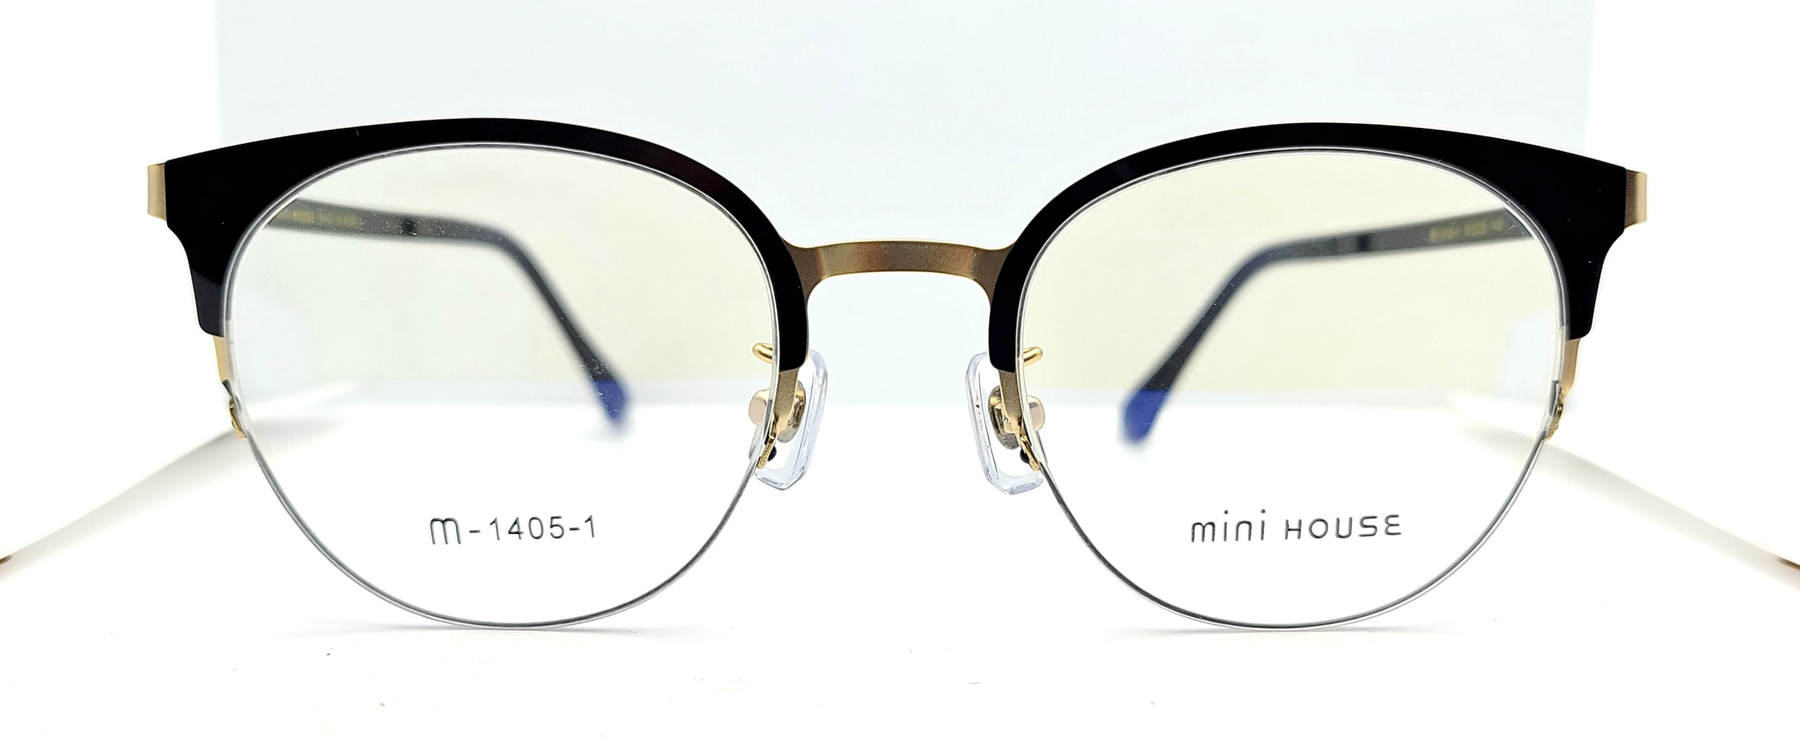 MINIHOUSE M-1405-1, Korean glasses, sunglasses, eyeglasses, glasses